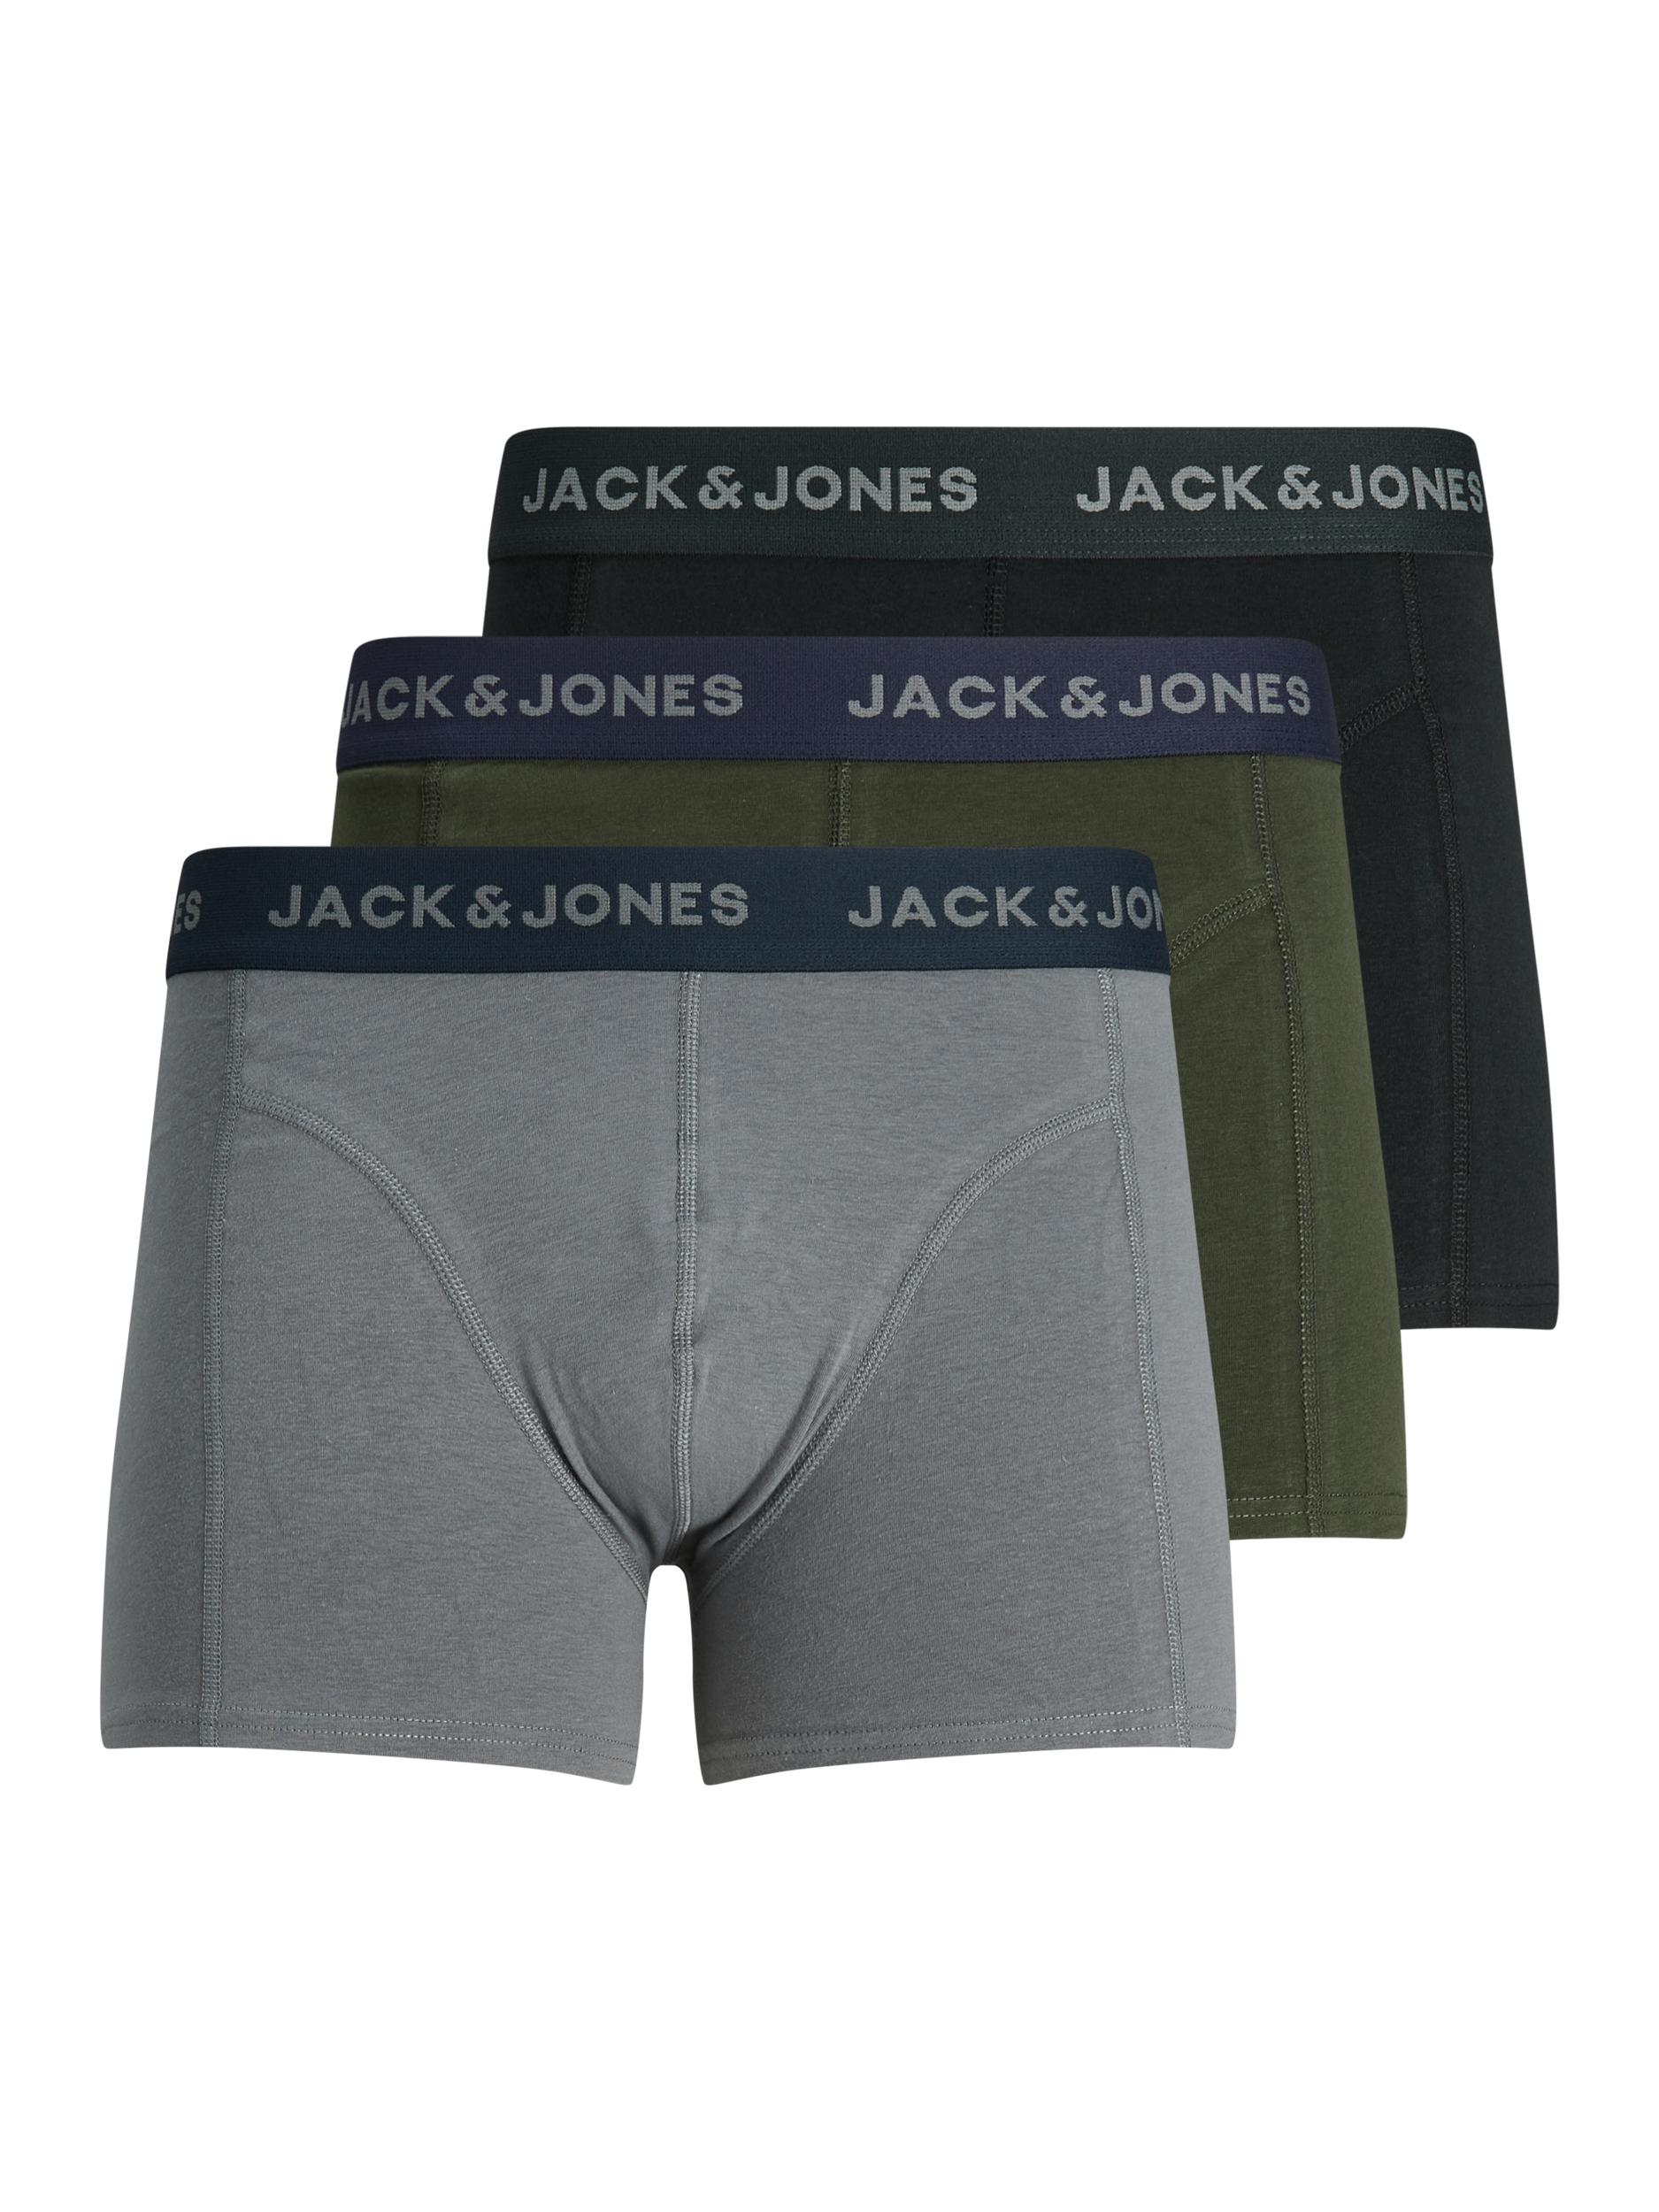 Afbeelding van Jack & Jones Jacbobbie trunks 3 pack jr